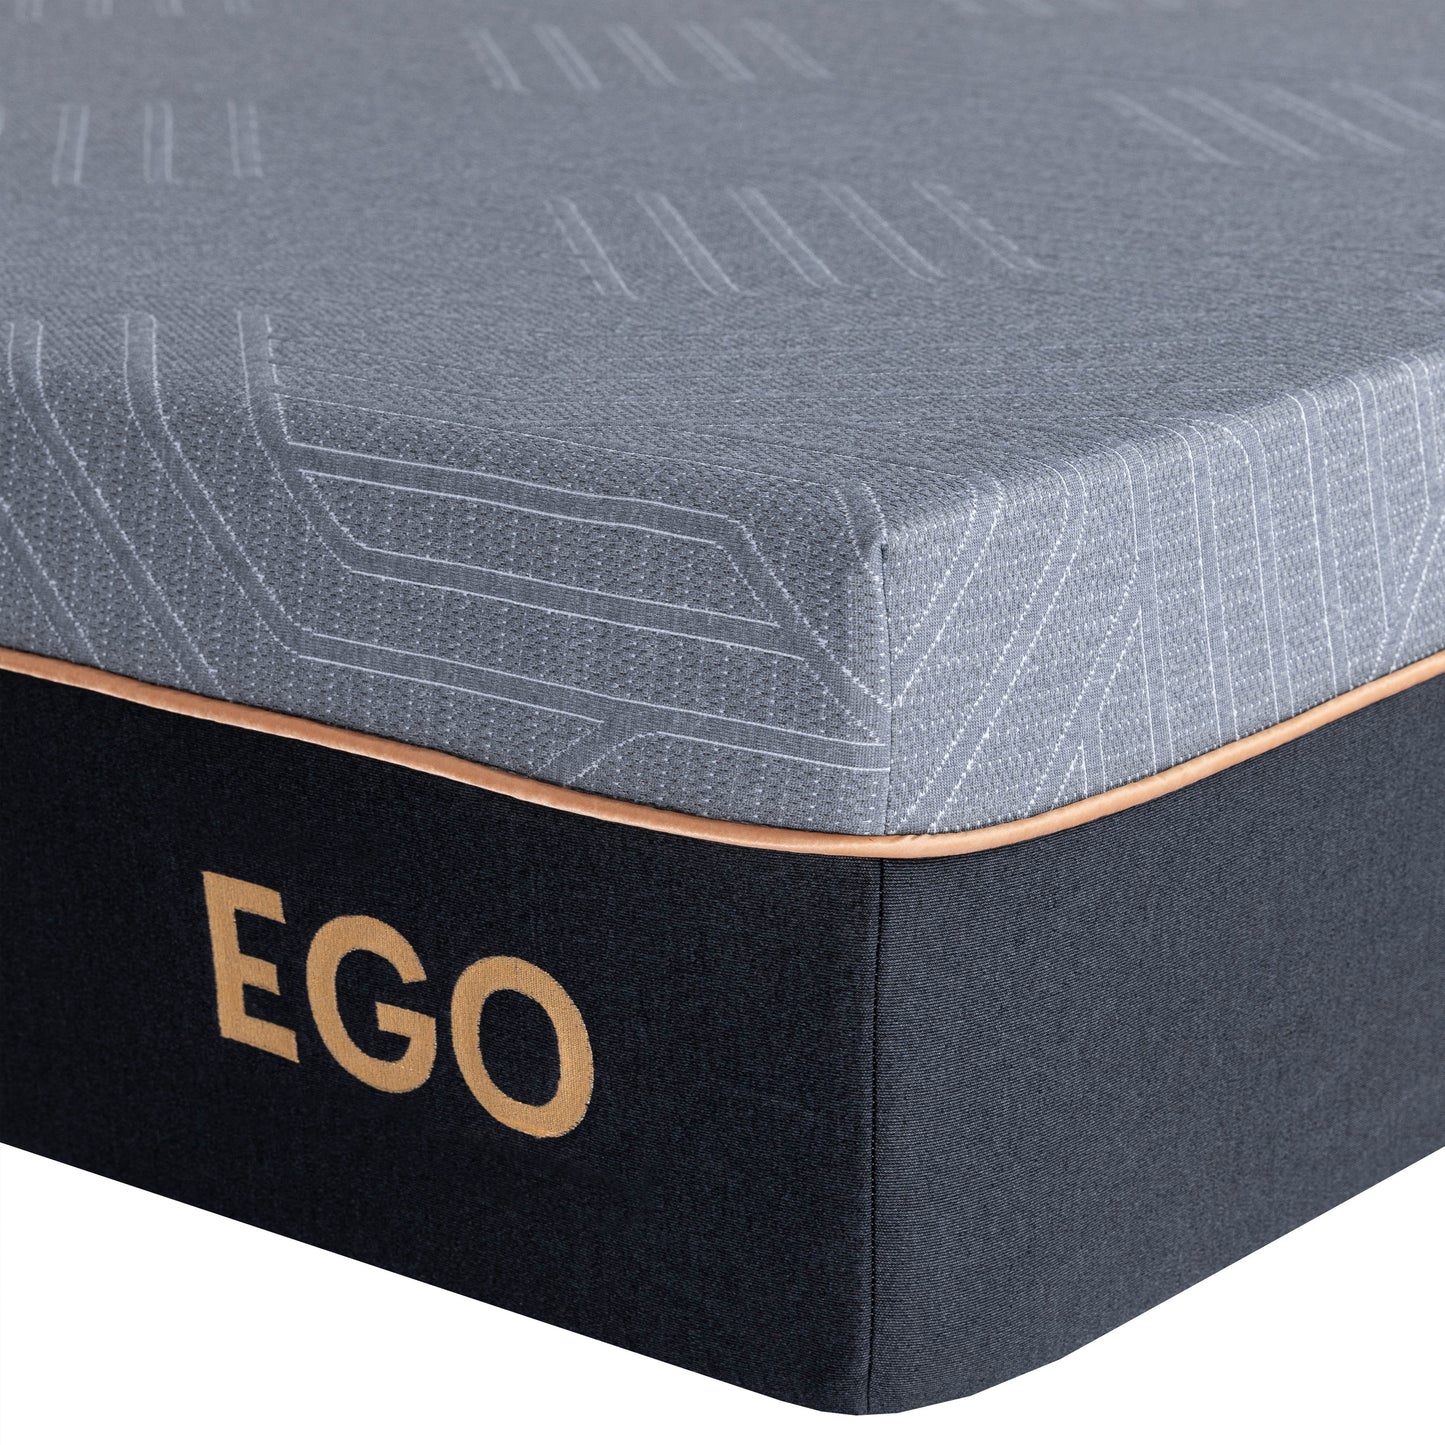 EGO Black Mattress with Graphene Technology 12"